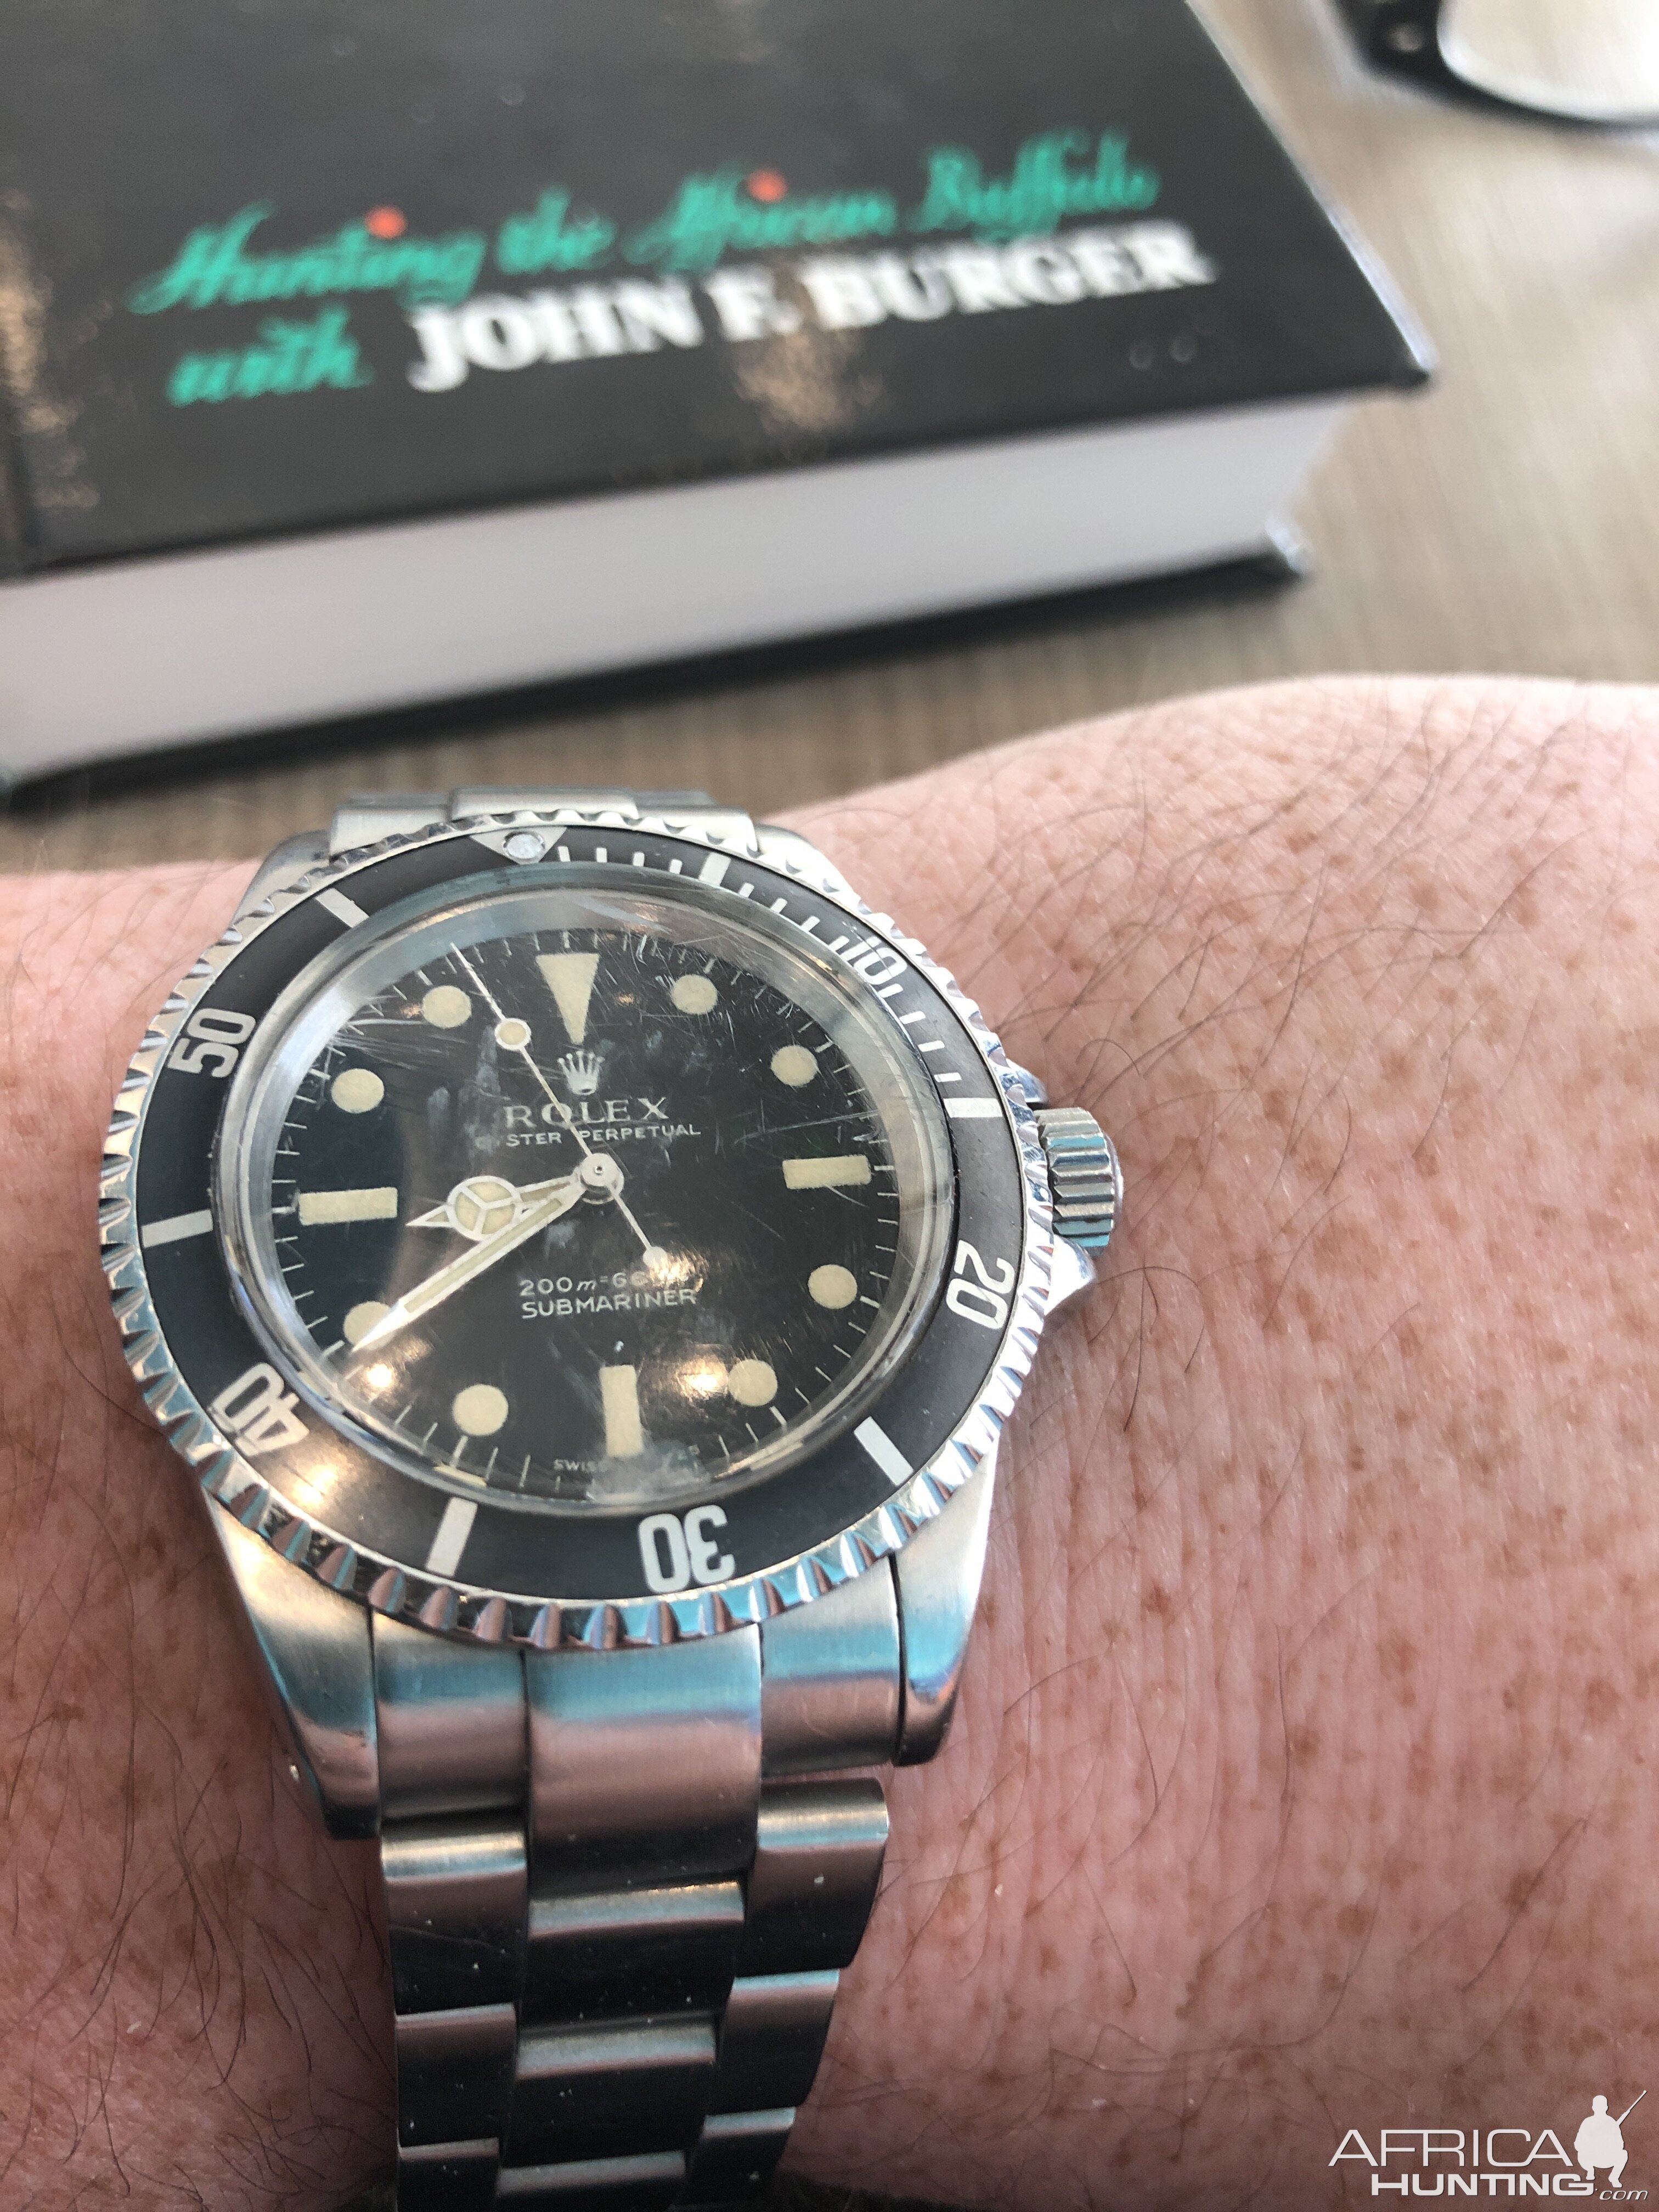 1969 5513 Rolex Sub Watch